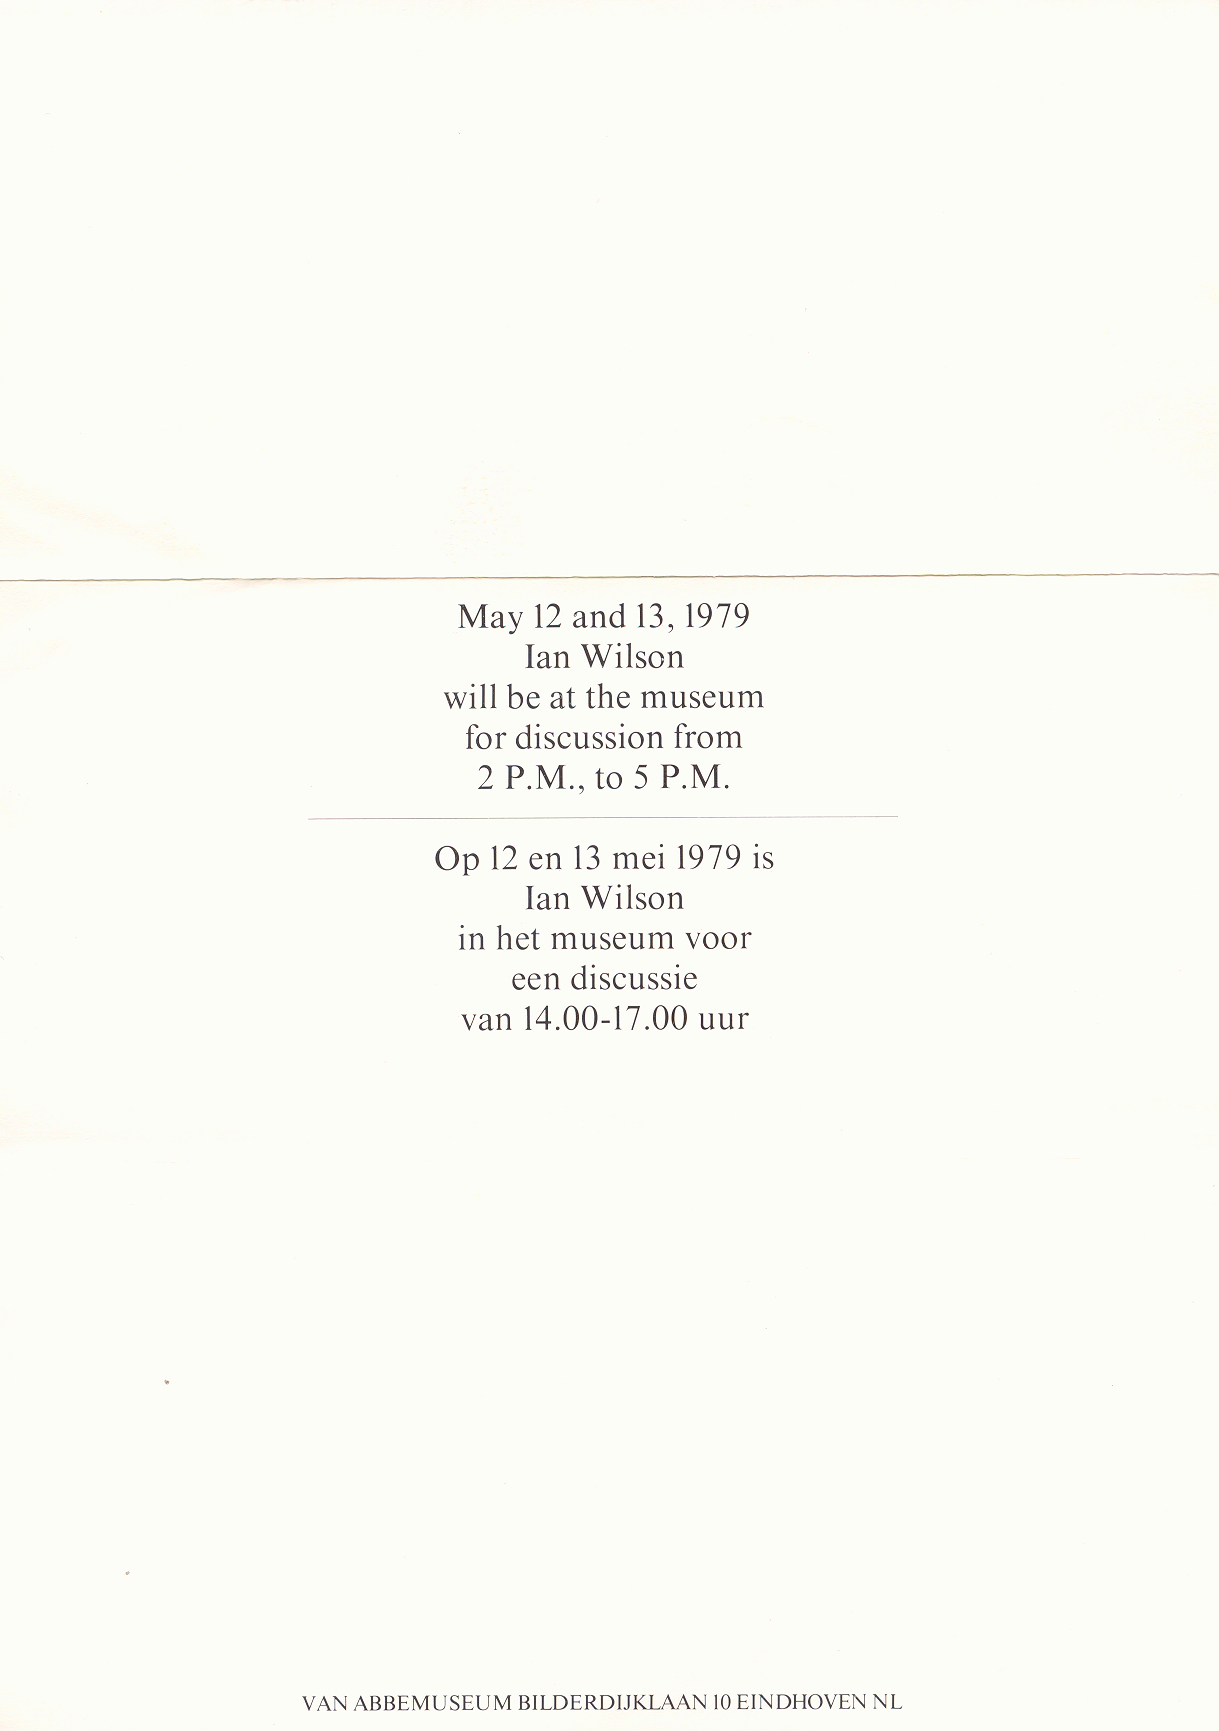 Ian Wilson- invitation for Van Abbemuseum